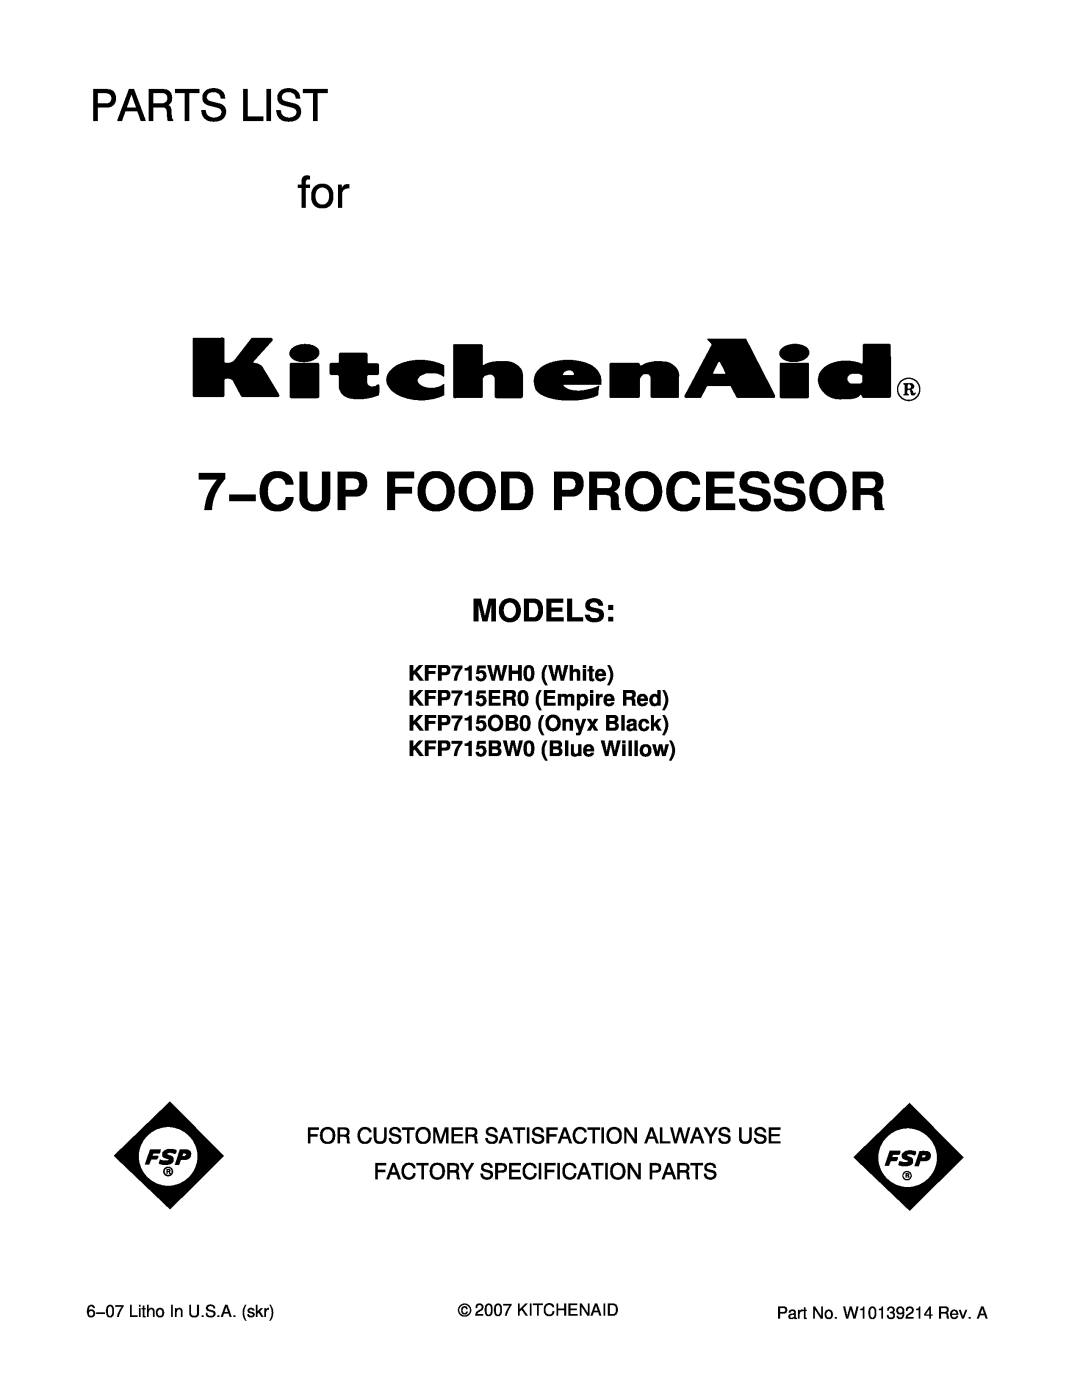 KitchenAid manual Models, KFP715WH0 White KFP715ER0 Empire Red KFP715OB0 Onyx Black, KFP715BW0 Blue Willow 